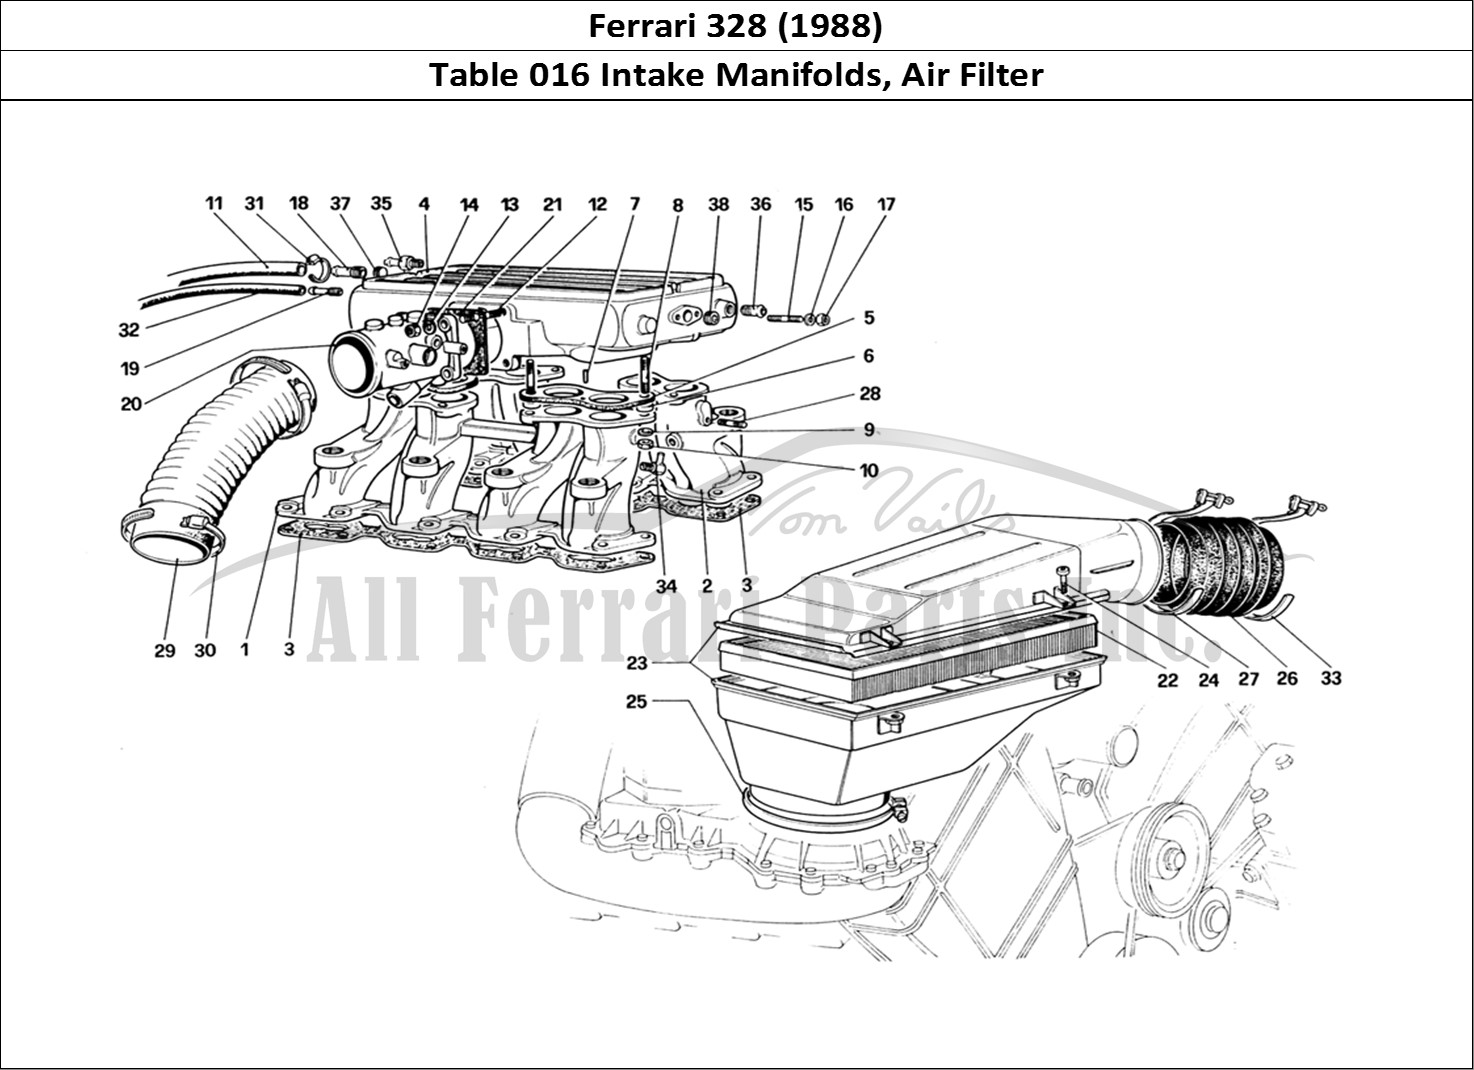 Ferrari Parts Ferrari 328 (1988) Page 016 Air Intake and Manifolds